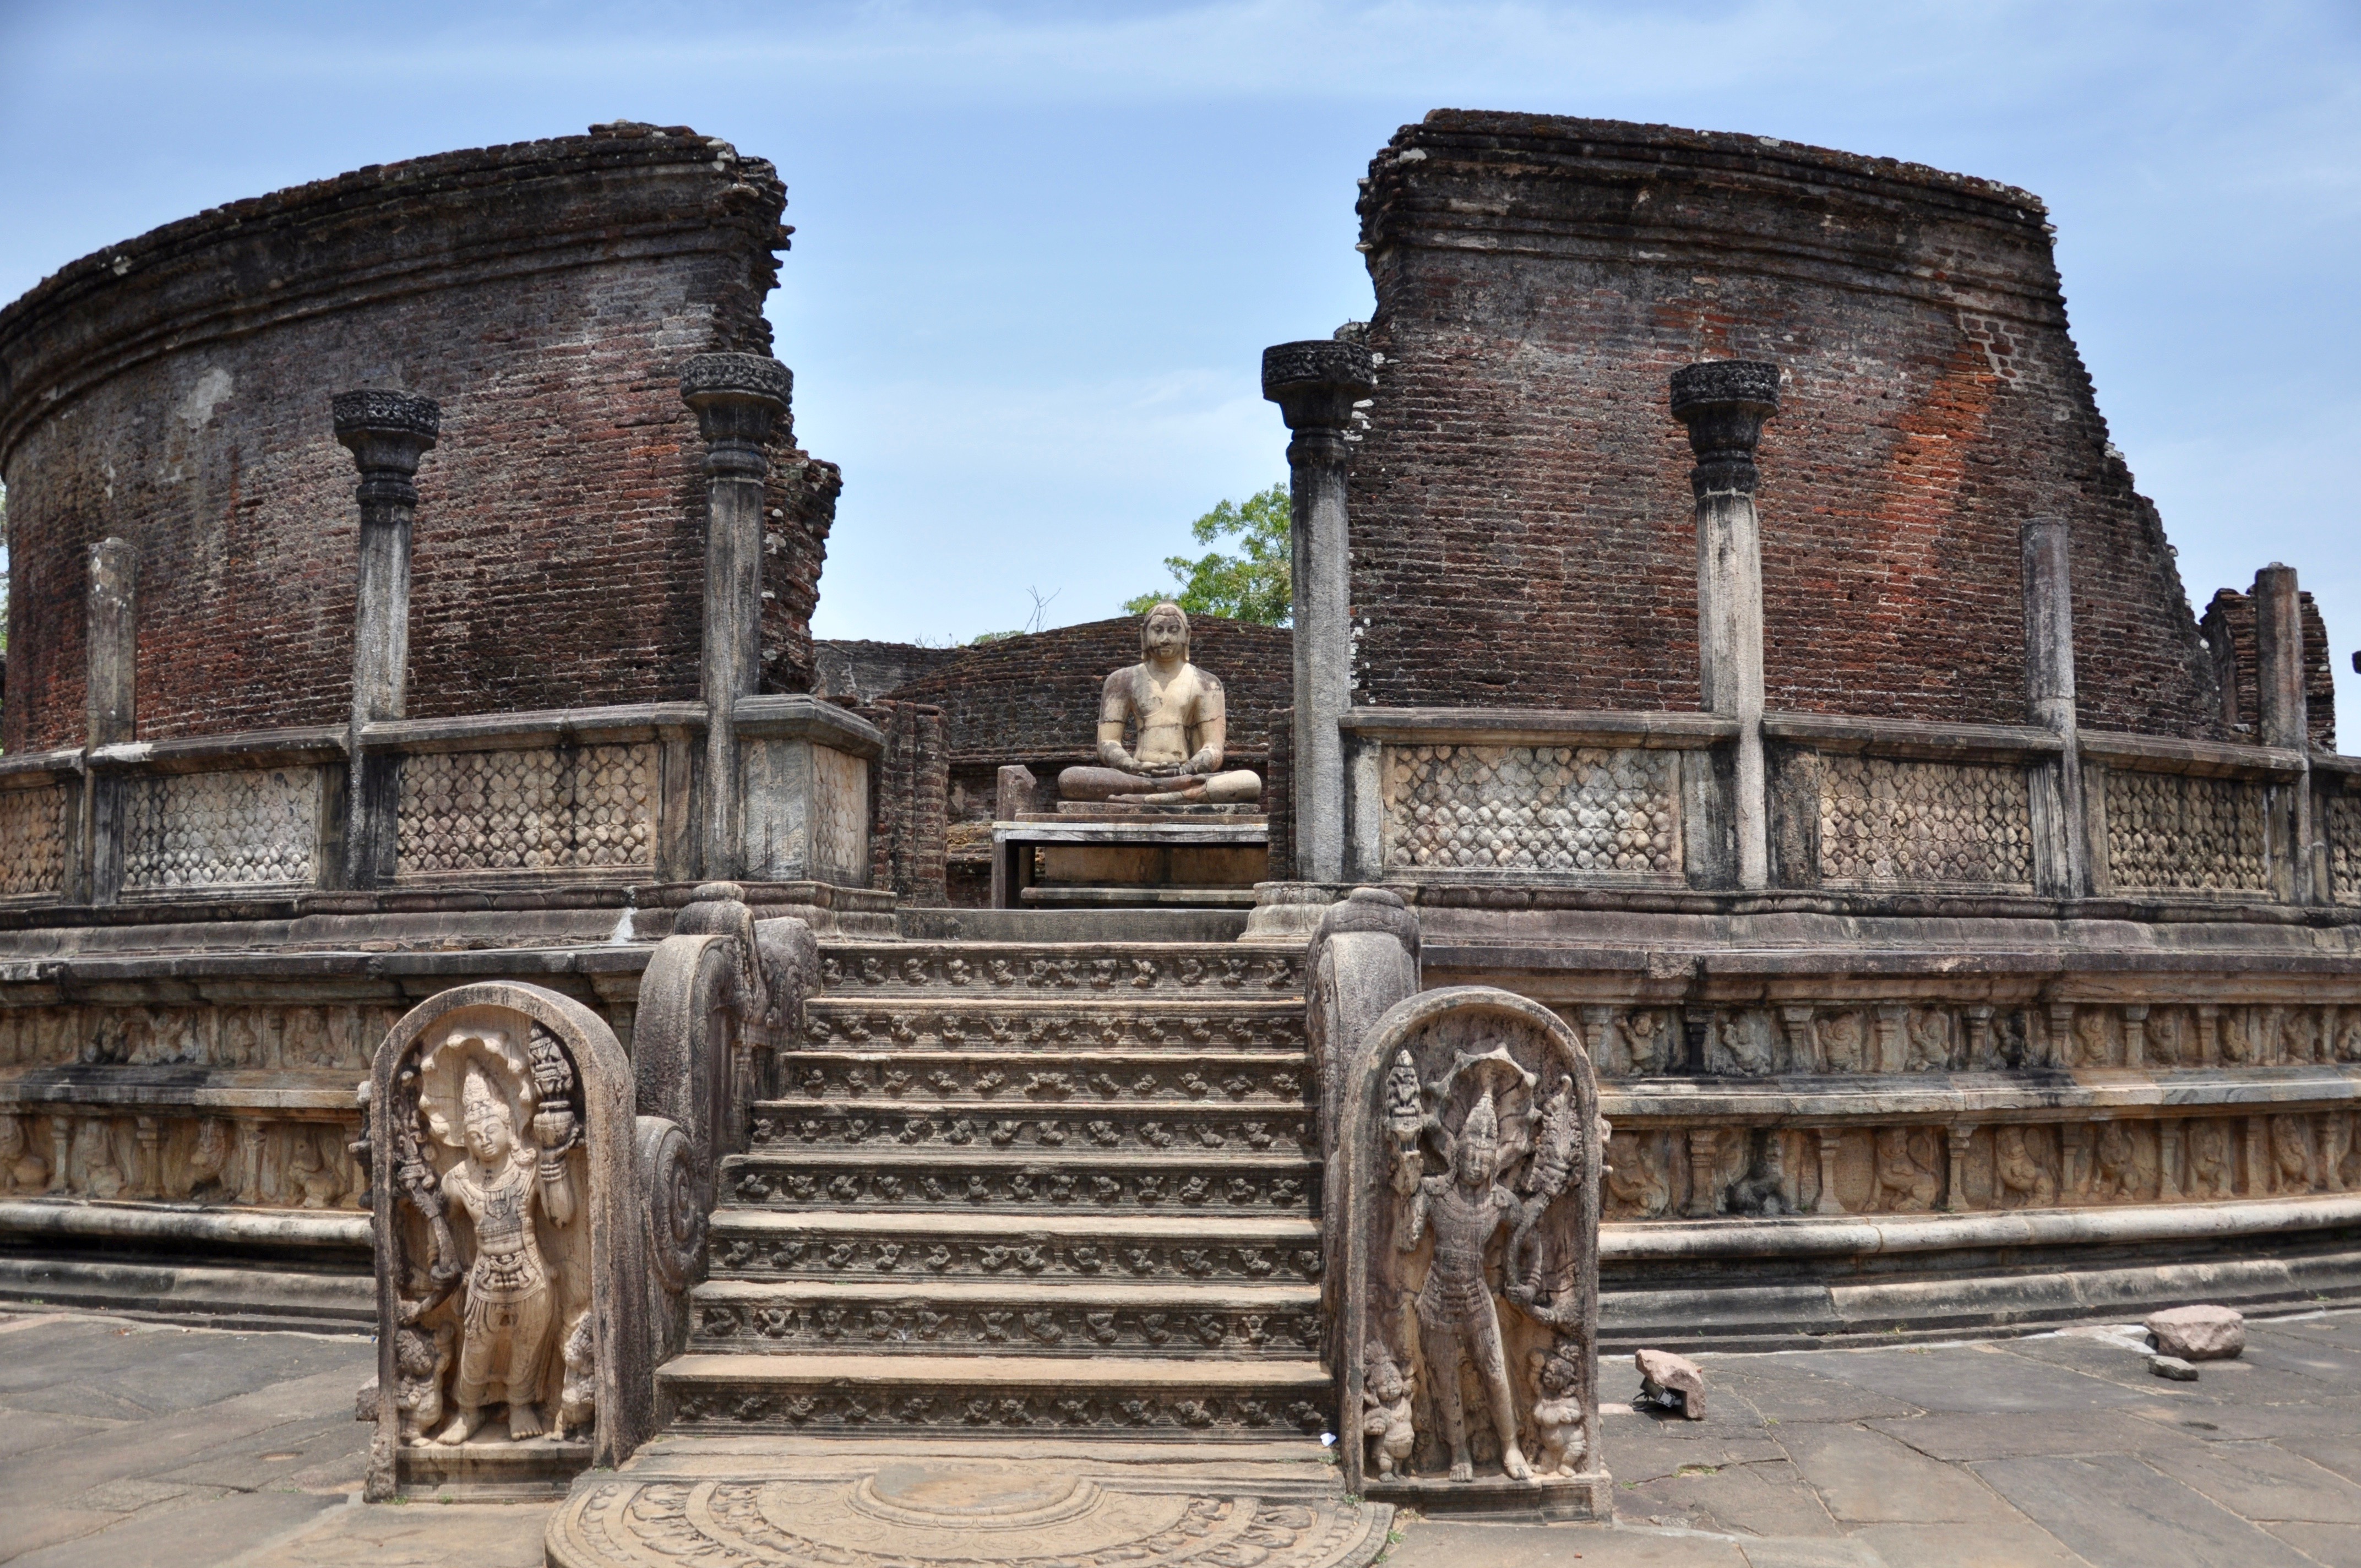 The Polonnaruwa Vatadage